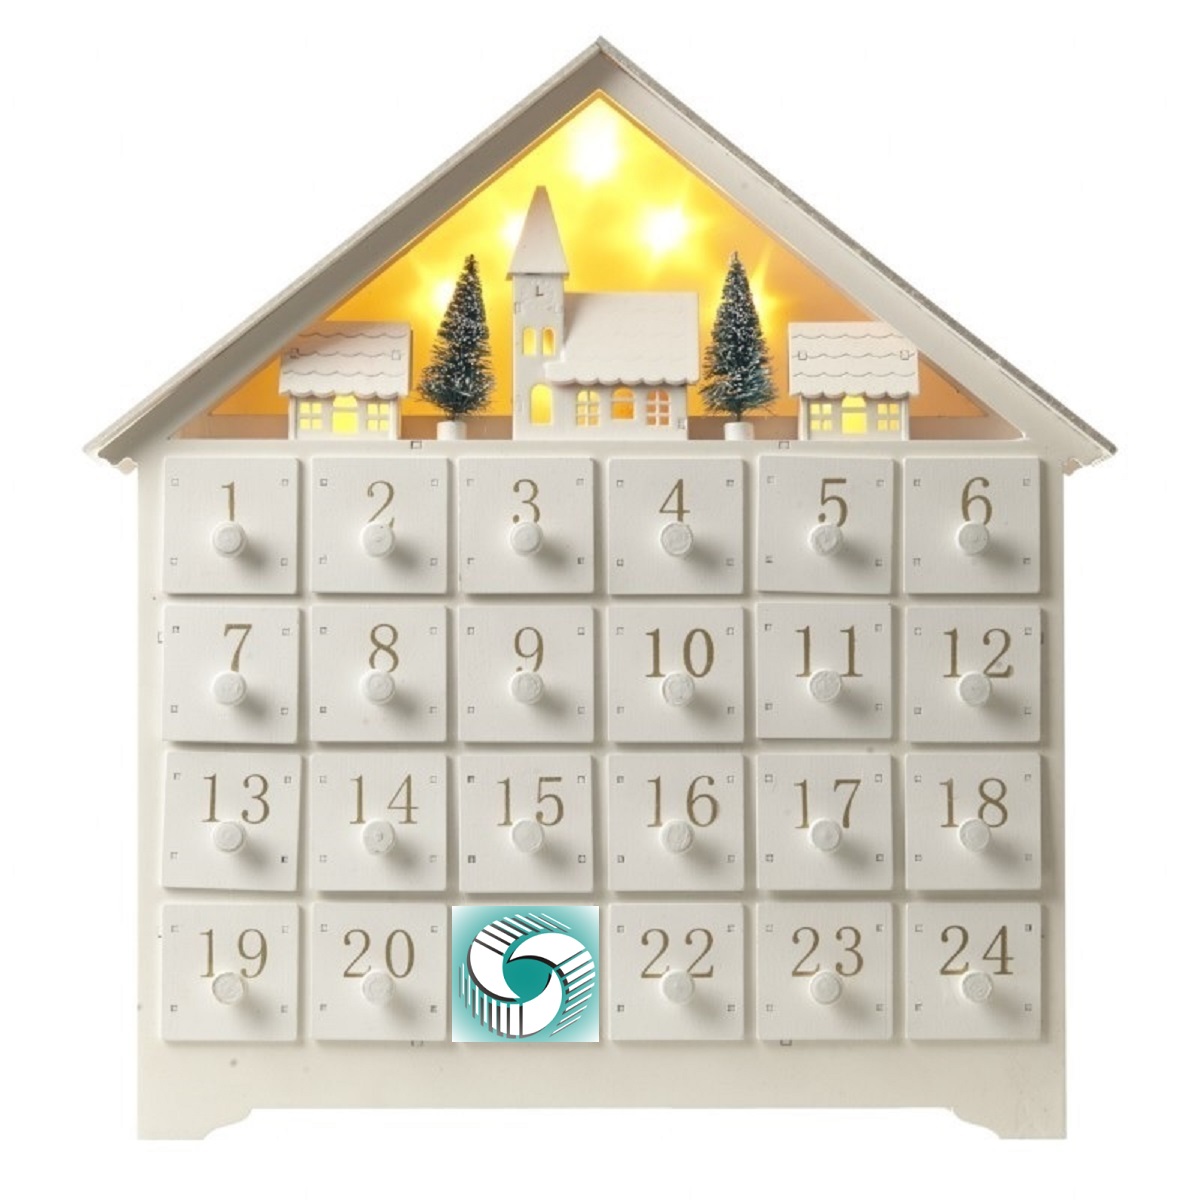 Day 21 – Frontier’s Advent Calendar